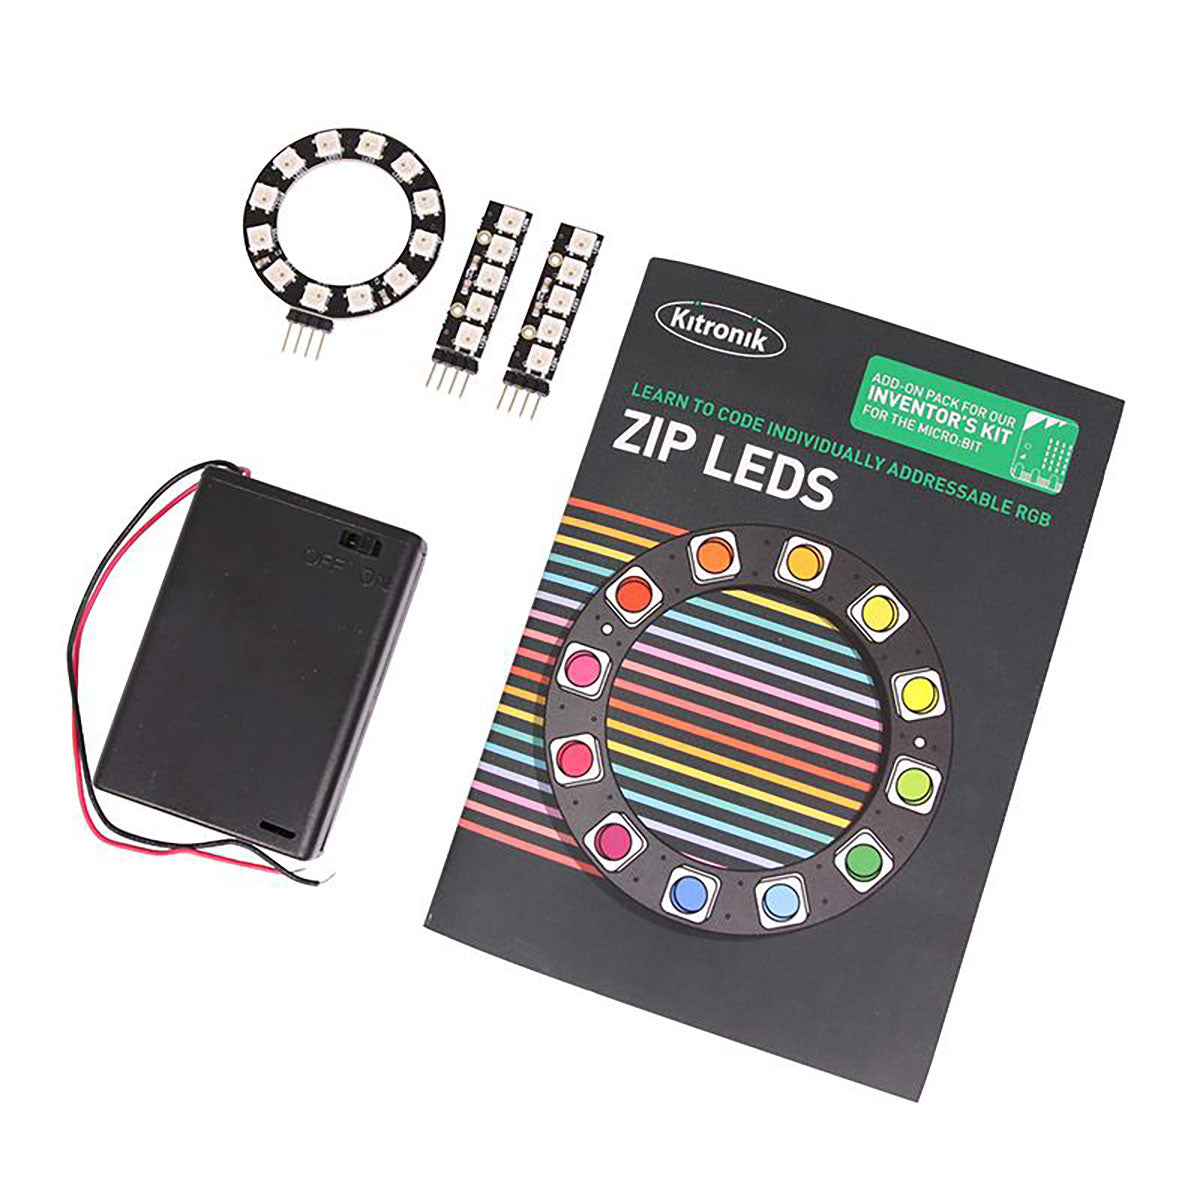 Kitronik Zip LEDs Add-On Pack Inventors Kit for micro:bit